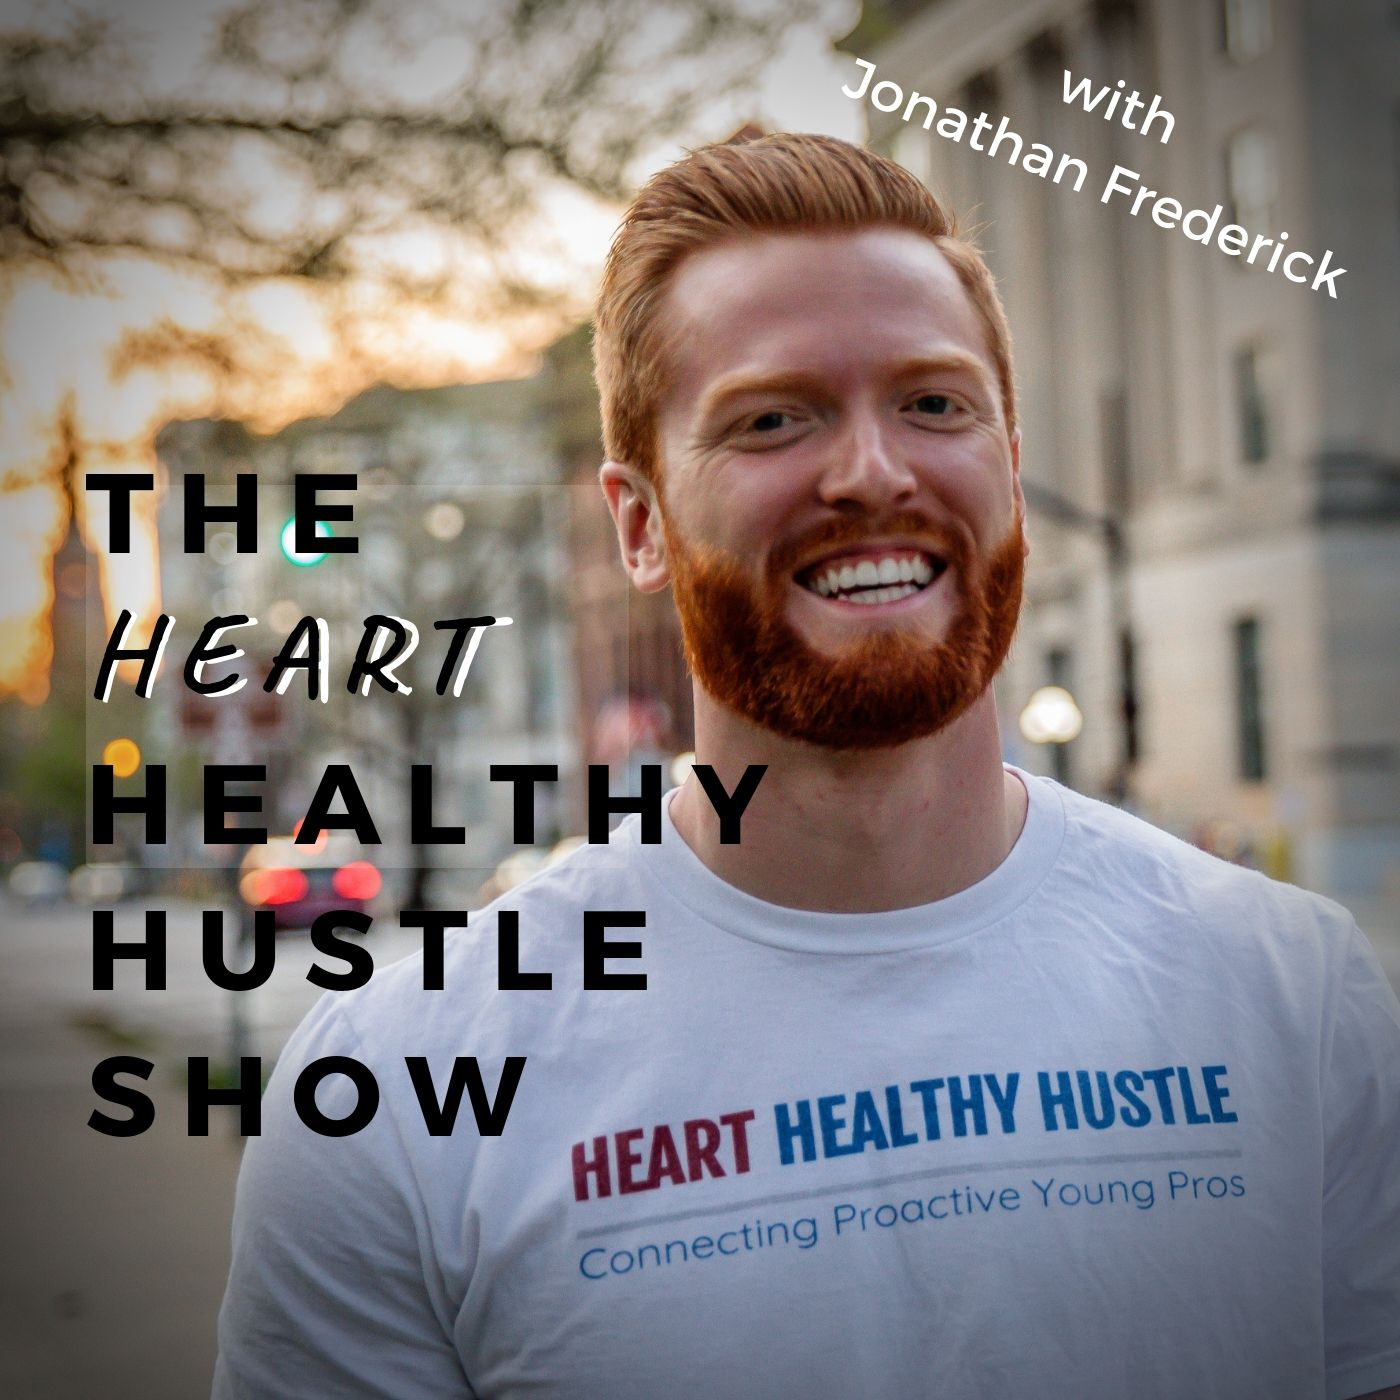 The Heart Healthy Hustle Show